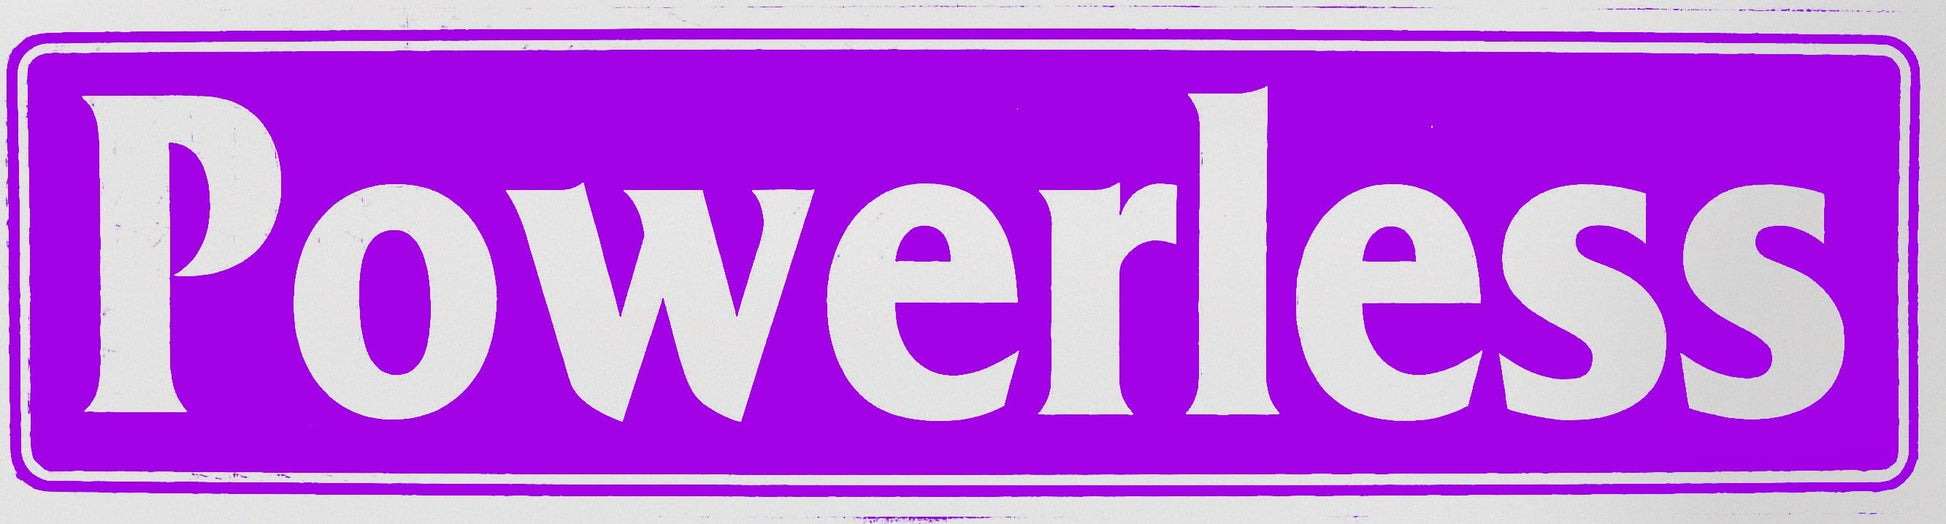 Powerless Bumper Sticker Purple